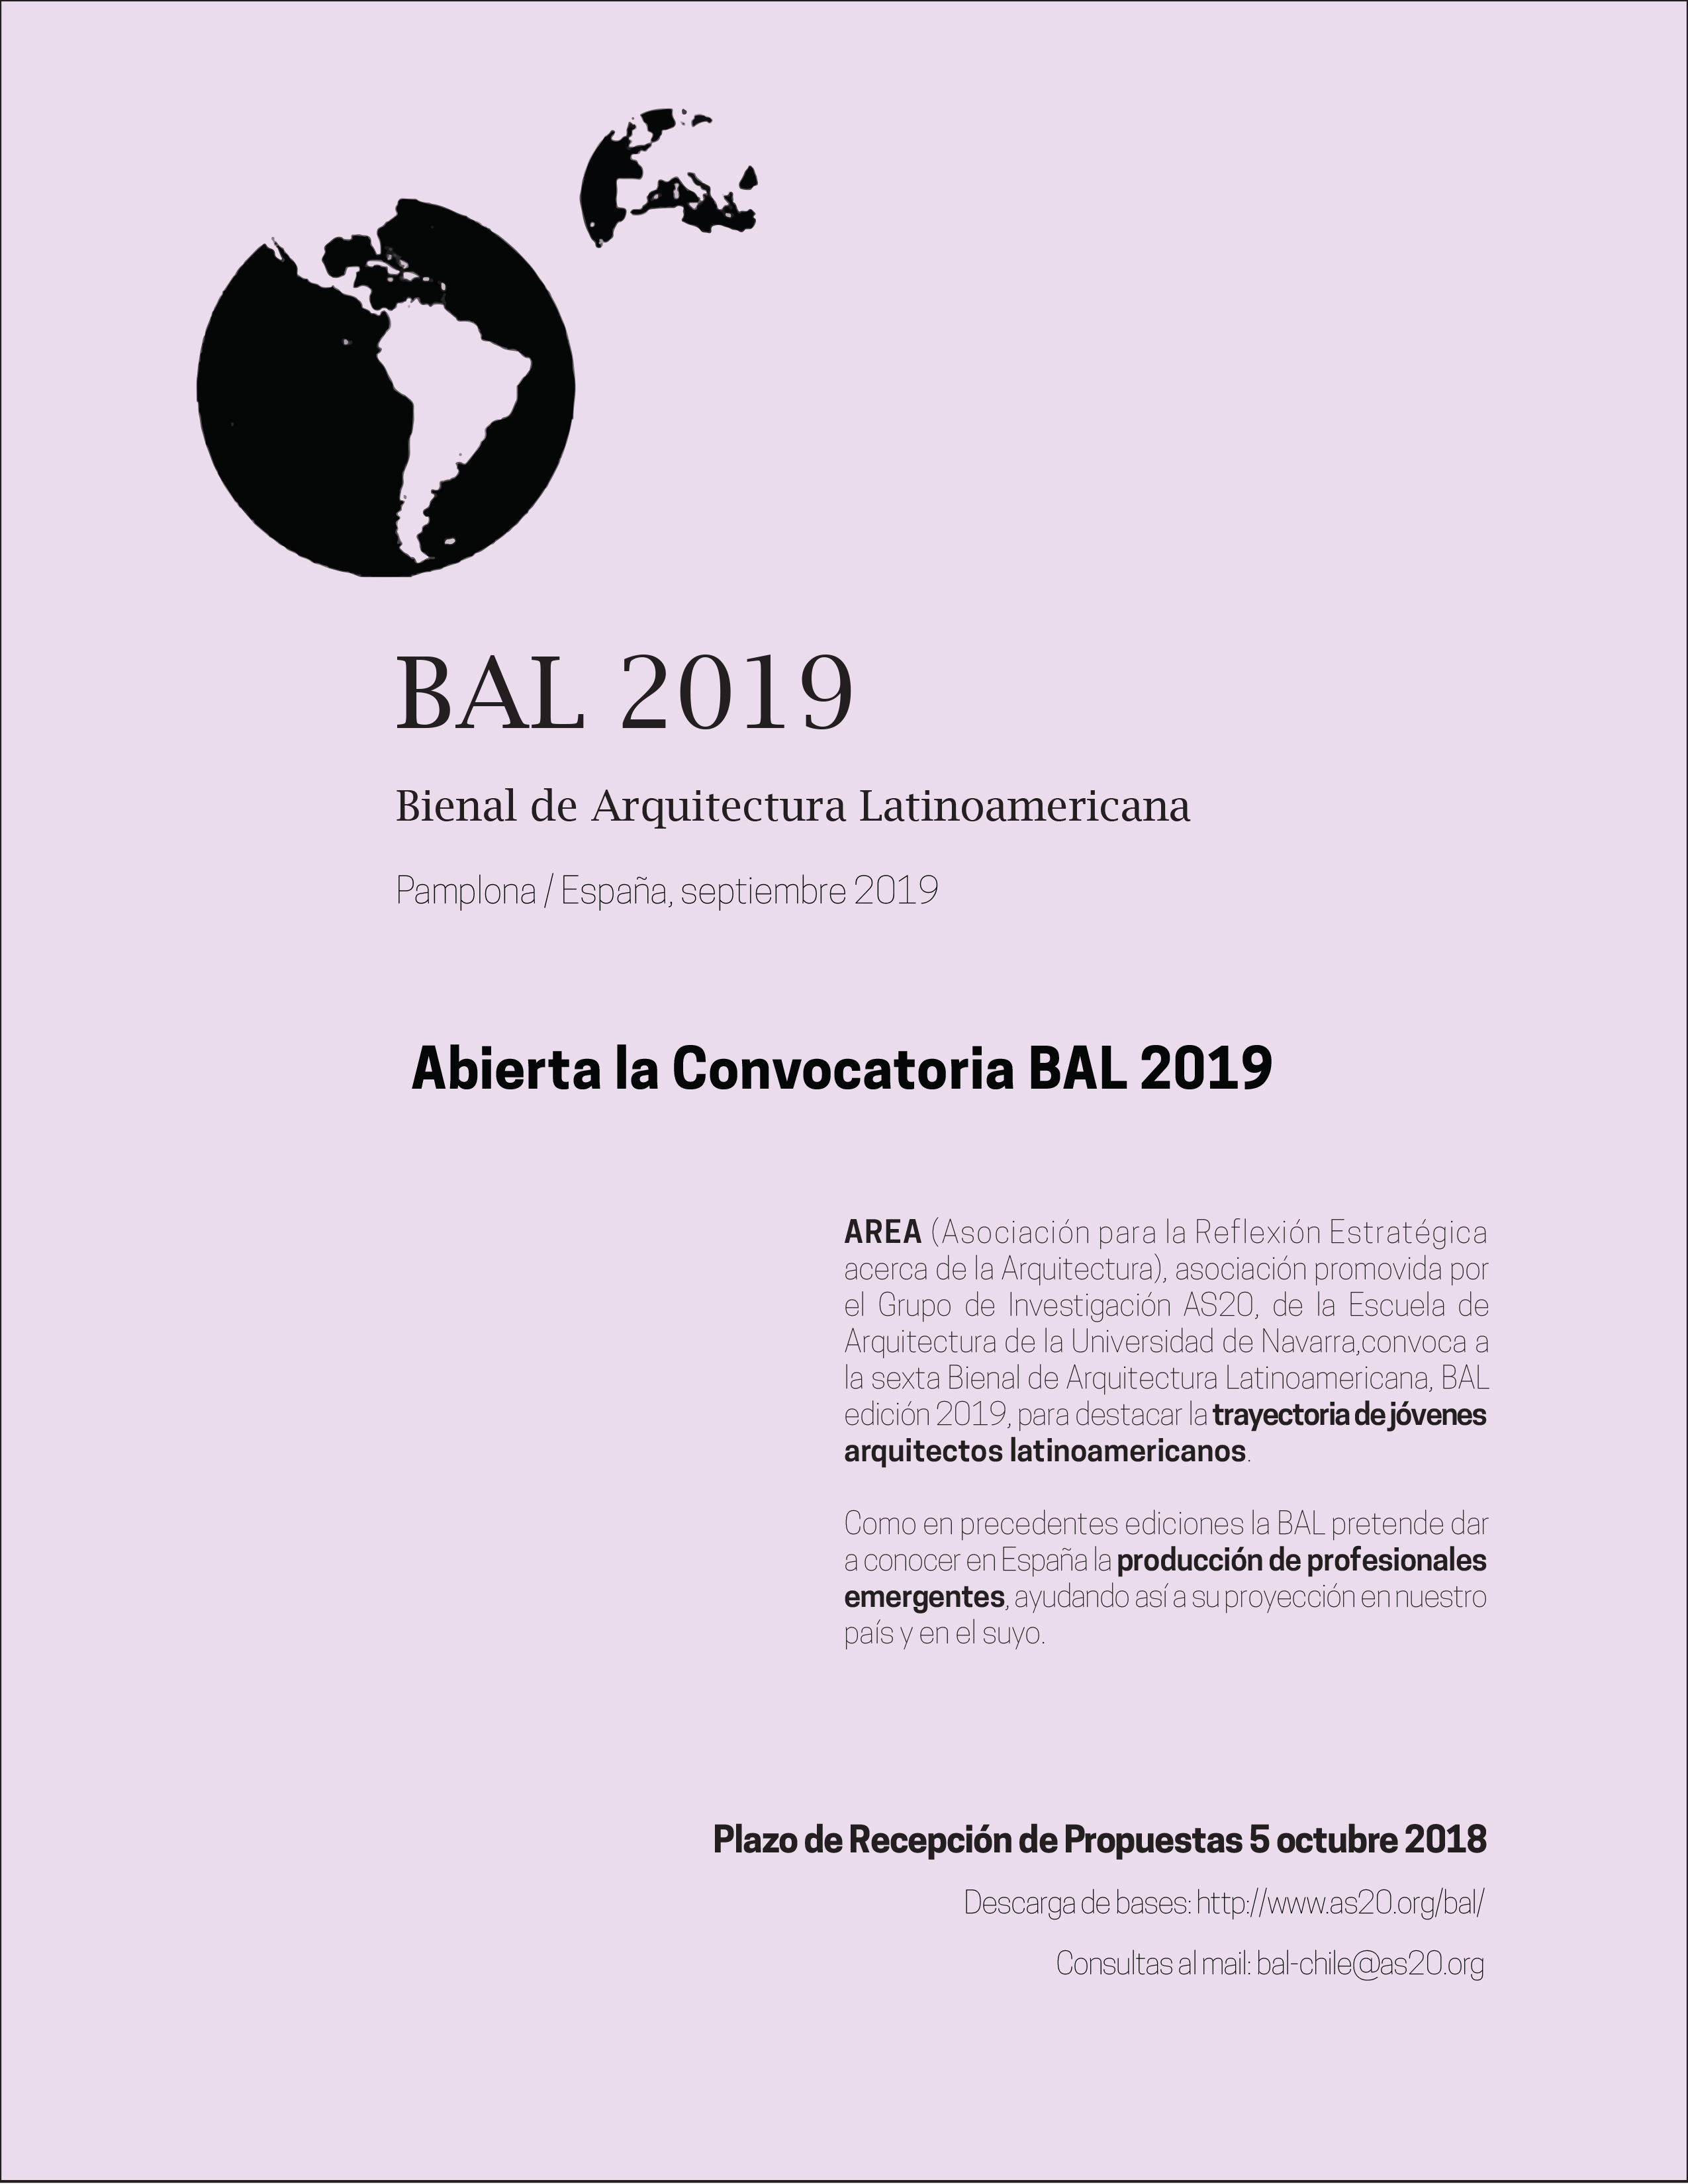 18-10-05_Convocatoria_abierta_a_Bienal_de_Arquitectura_Latinoamericana_BAL_2019_afiche.jpg